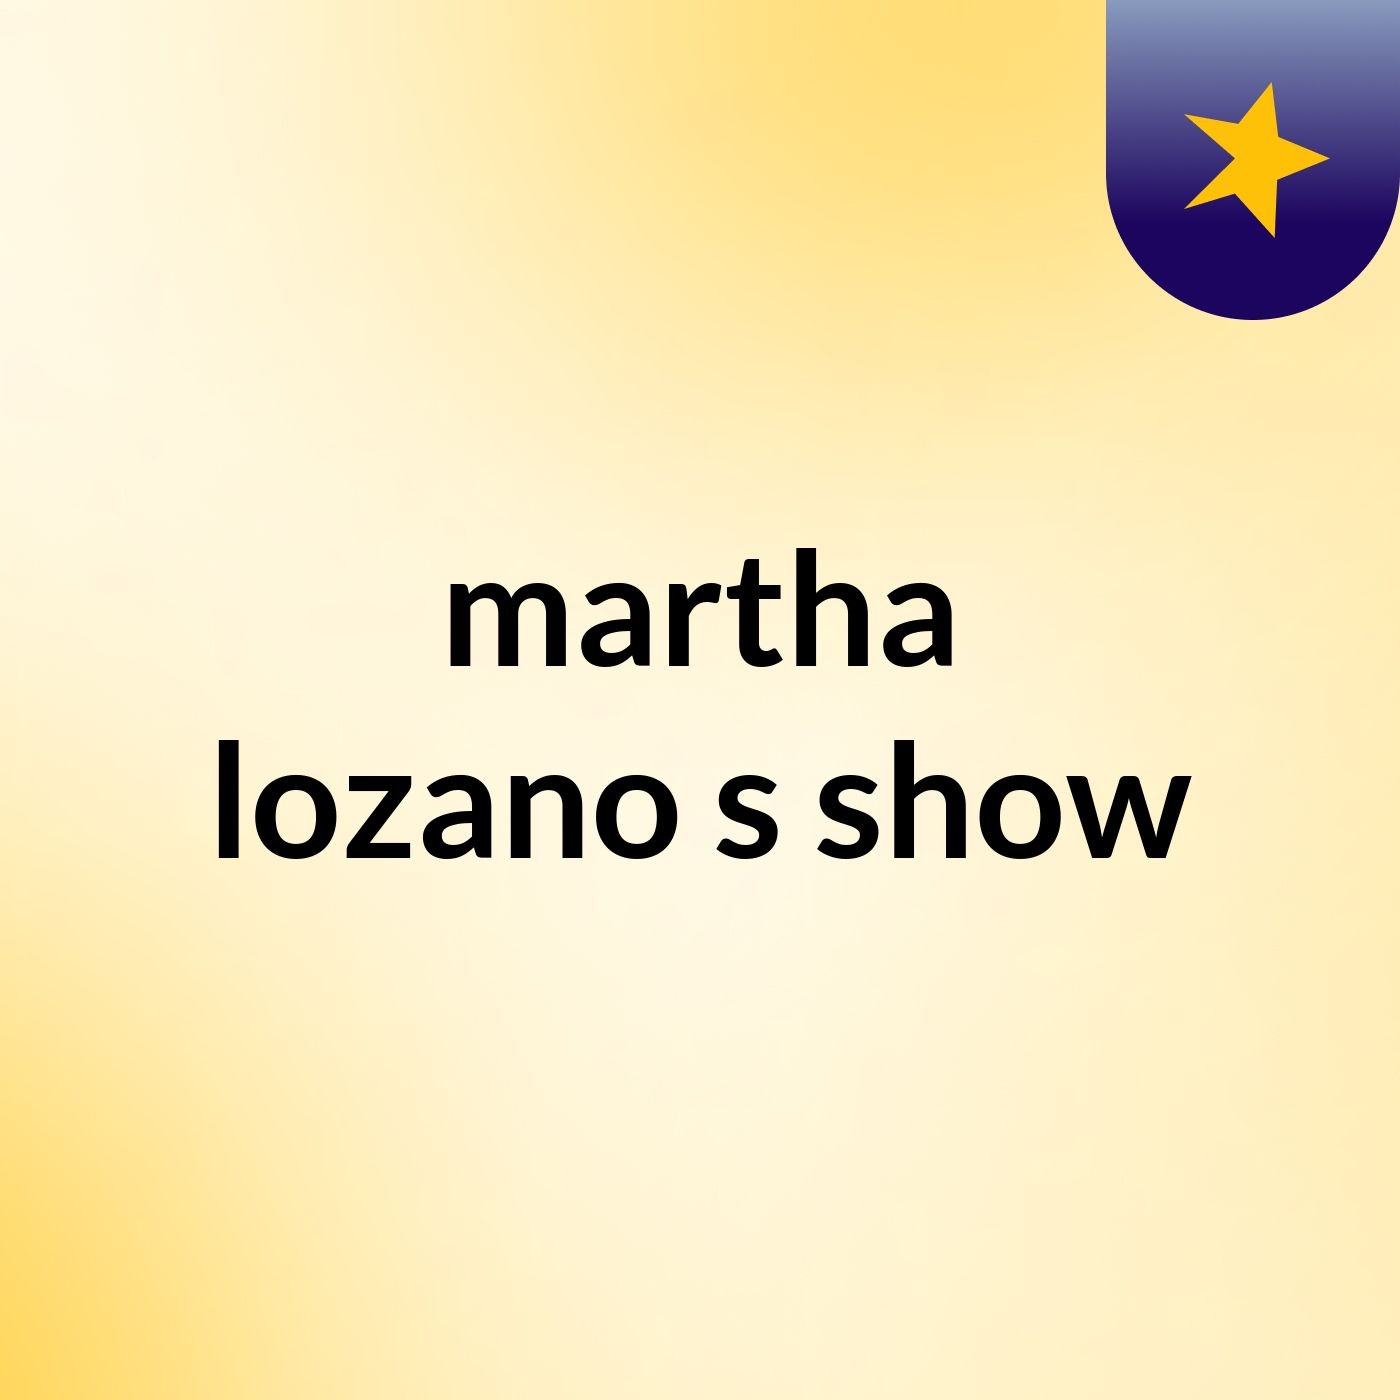 martha lozano's show